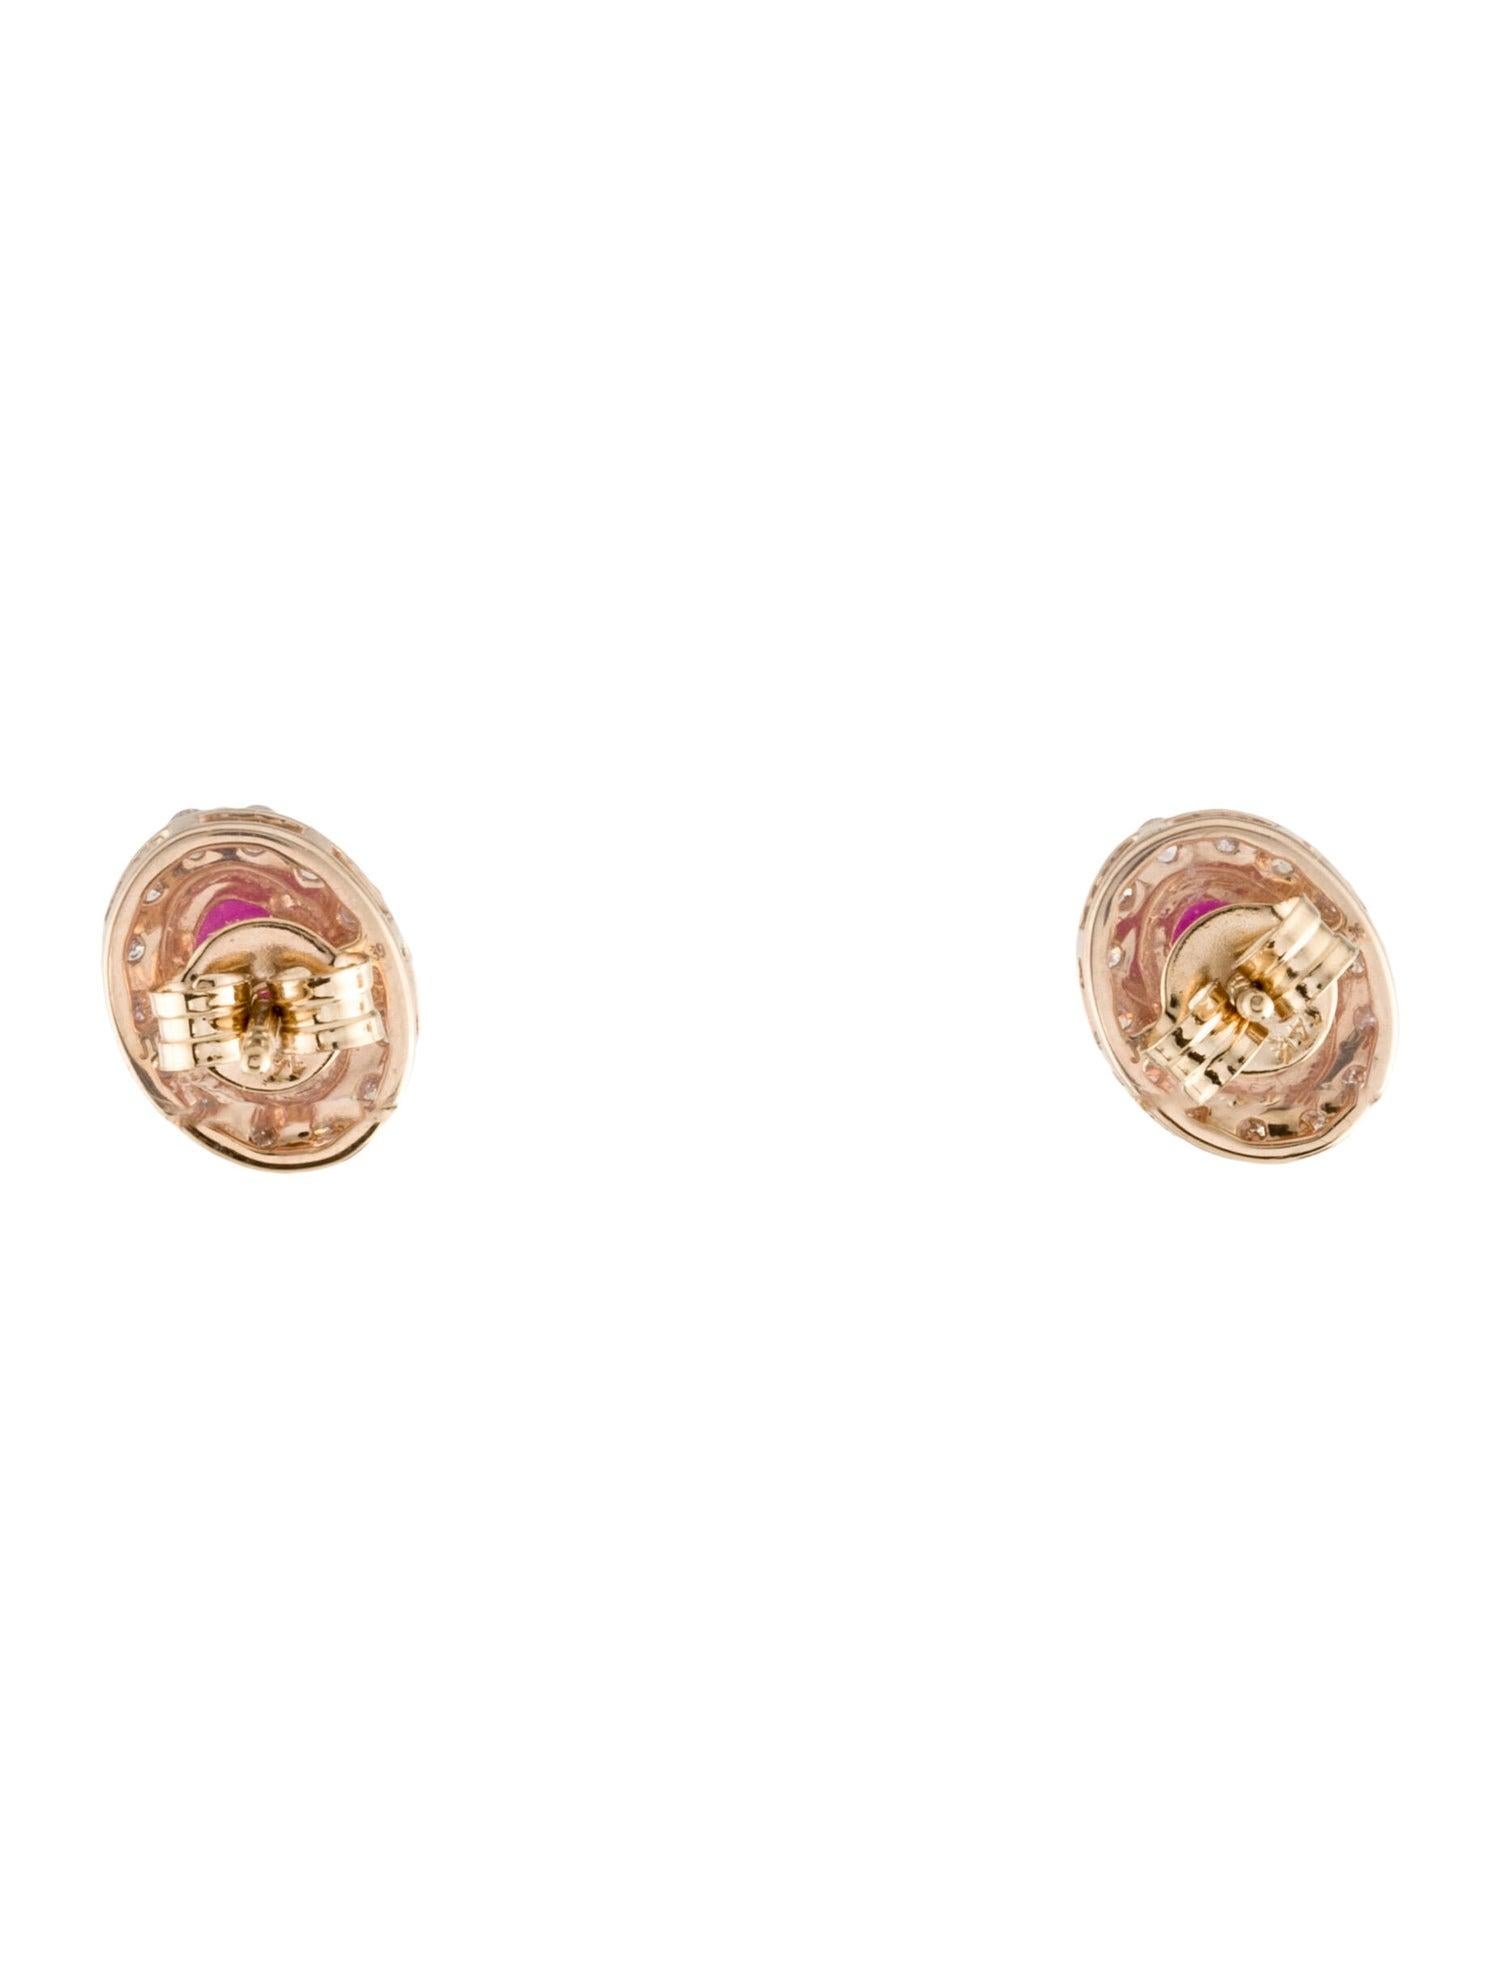 Brilliant Cut 14K Ruby & Diamond Stud Earrings - Elegant Gemstone Jewelry, Timeless Sparkle For Sale